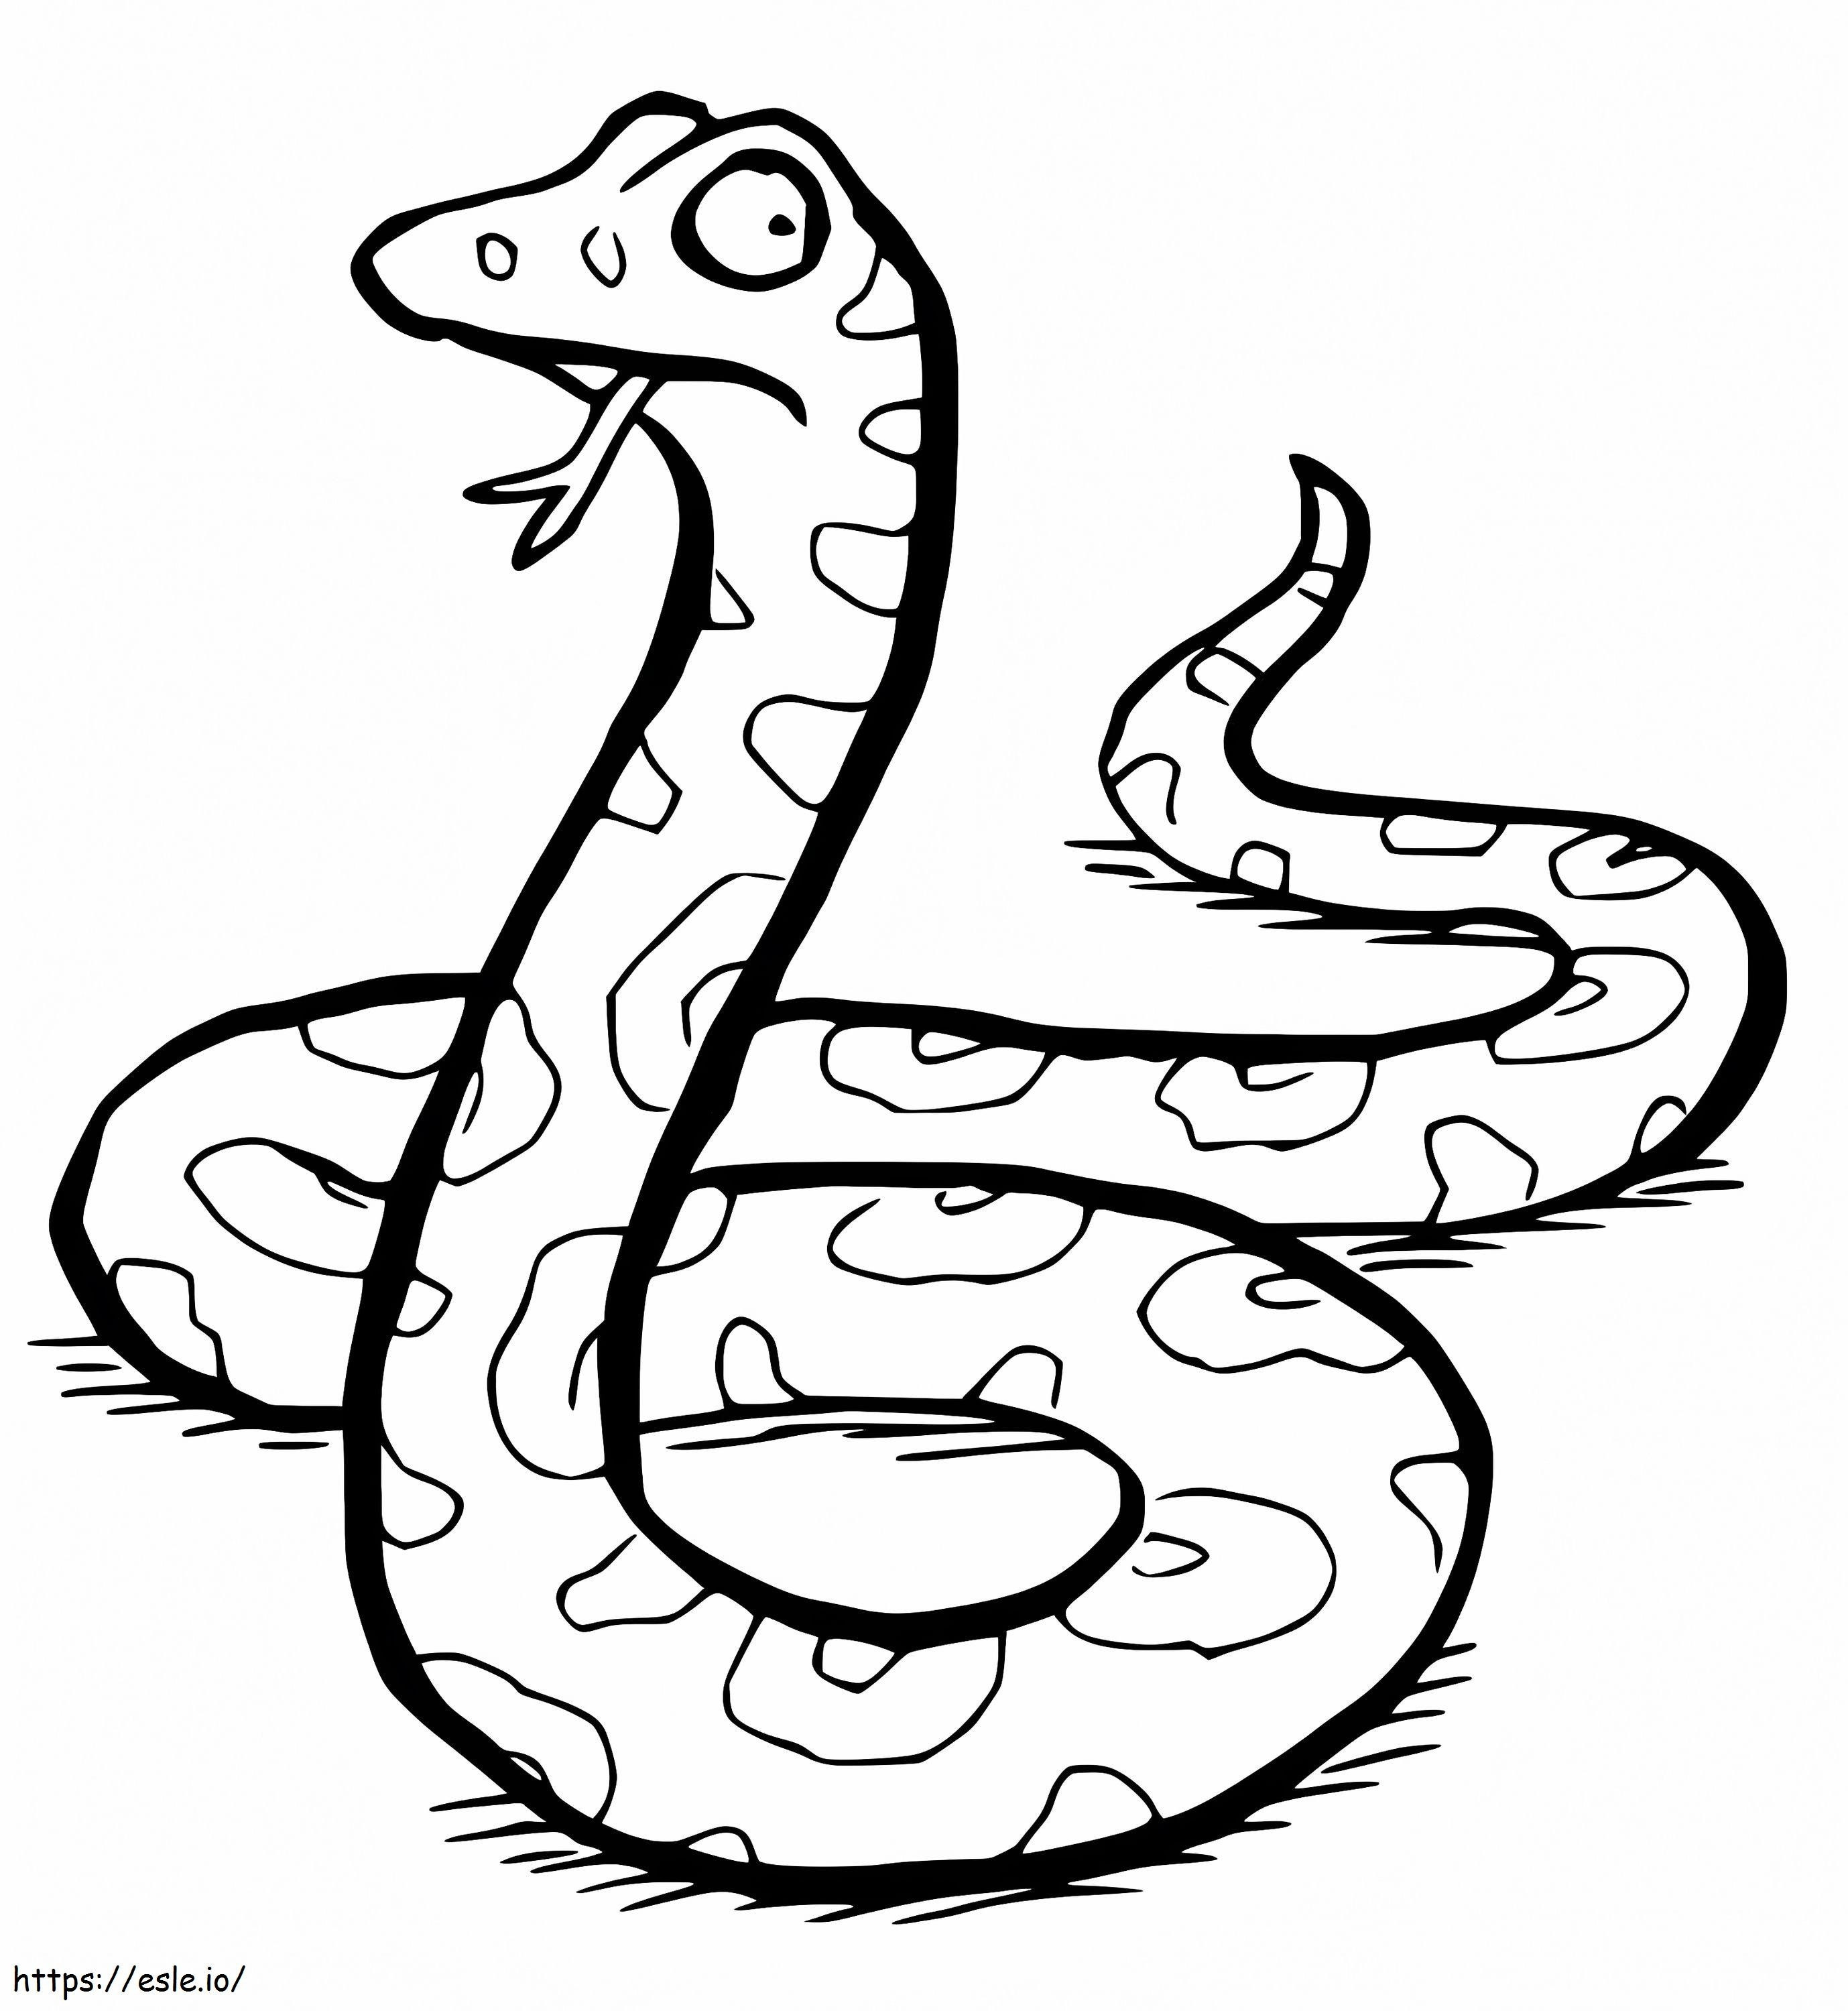 Coloriage Serpent de Gruffalo à imprimer dessin